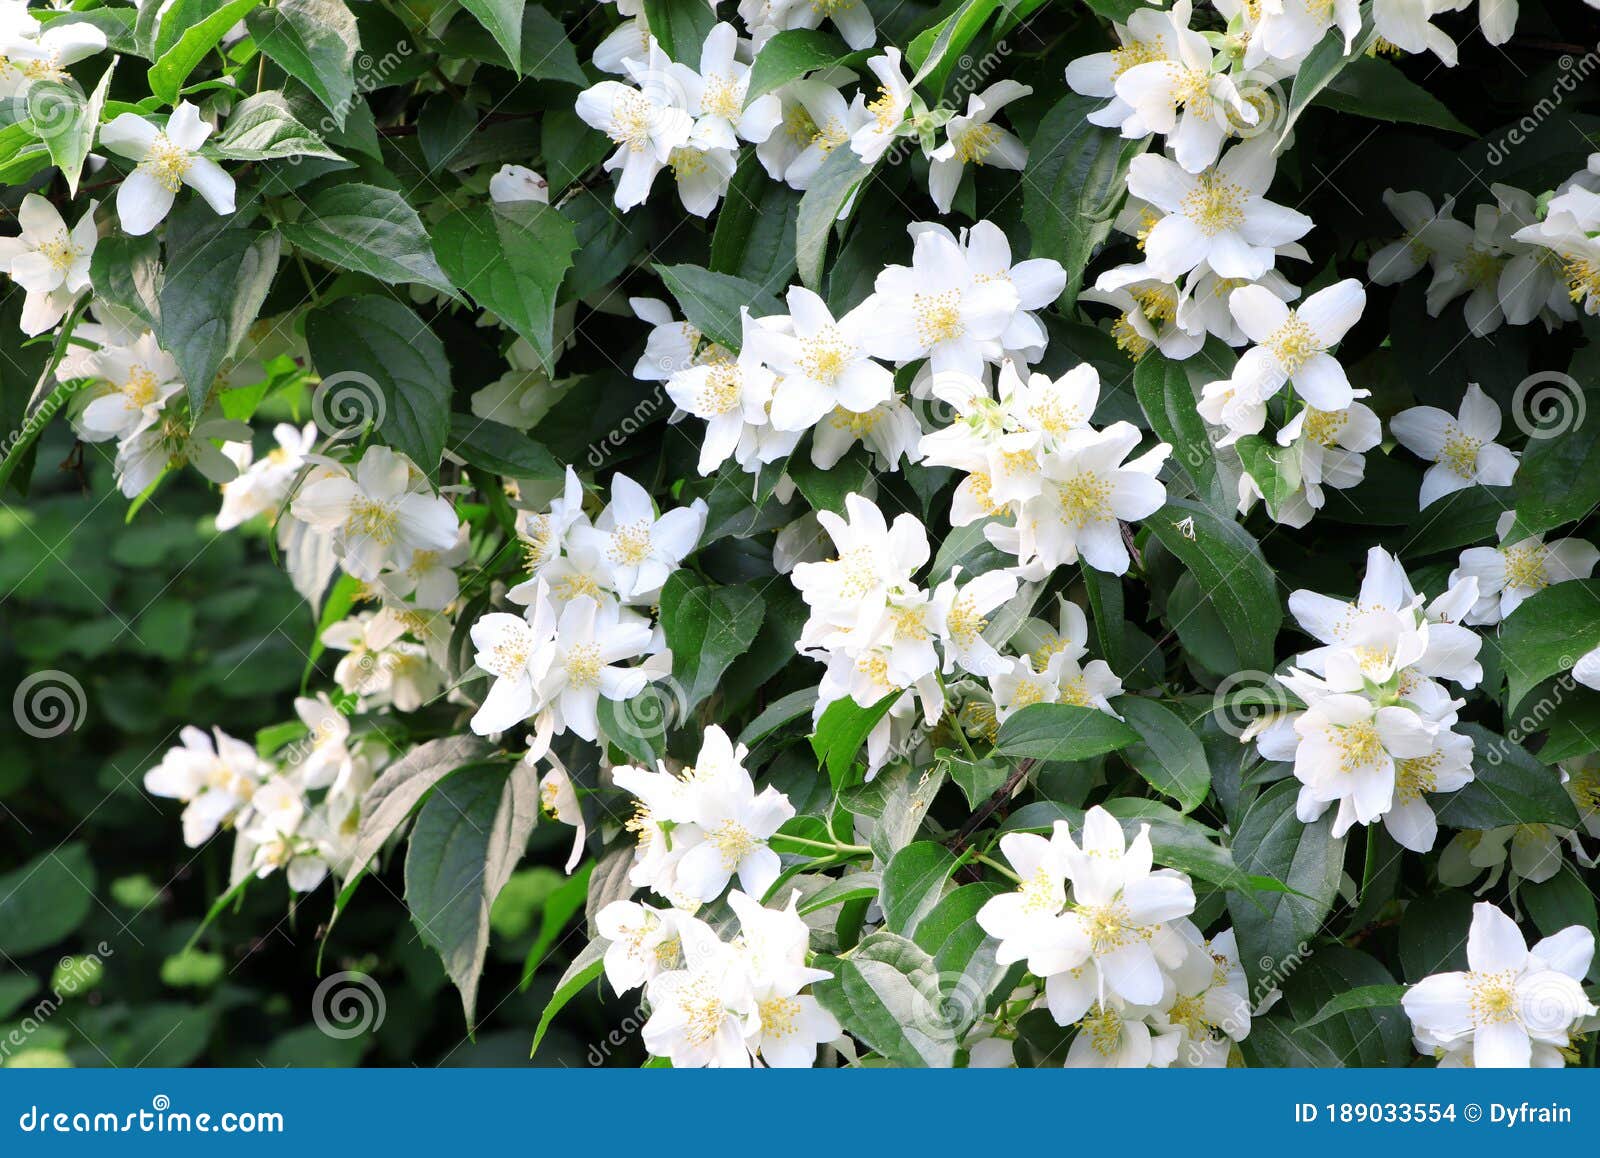 Цветы жасмина (141 фото)